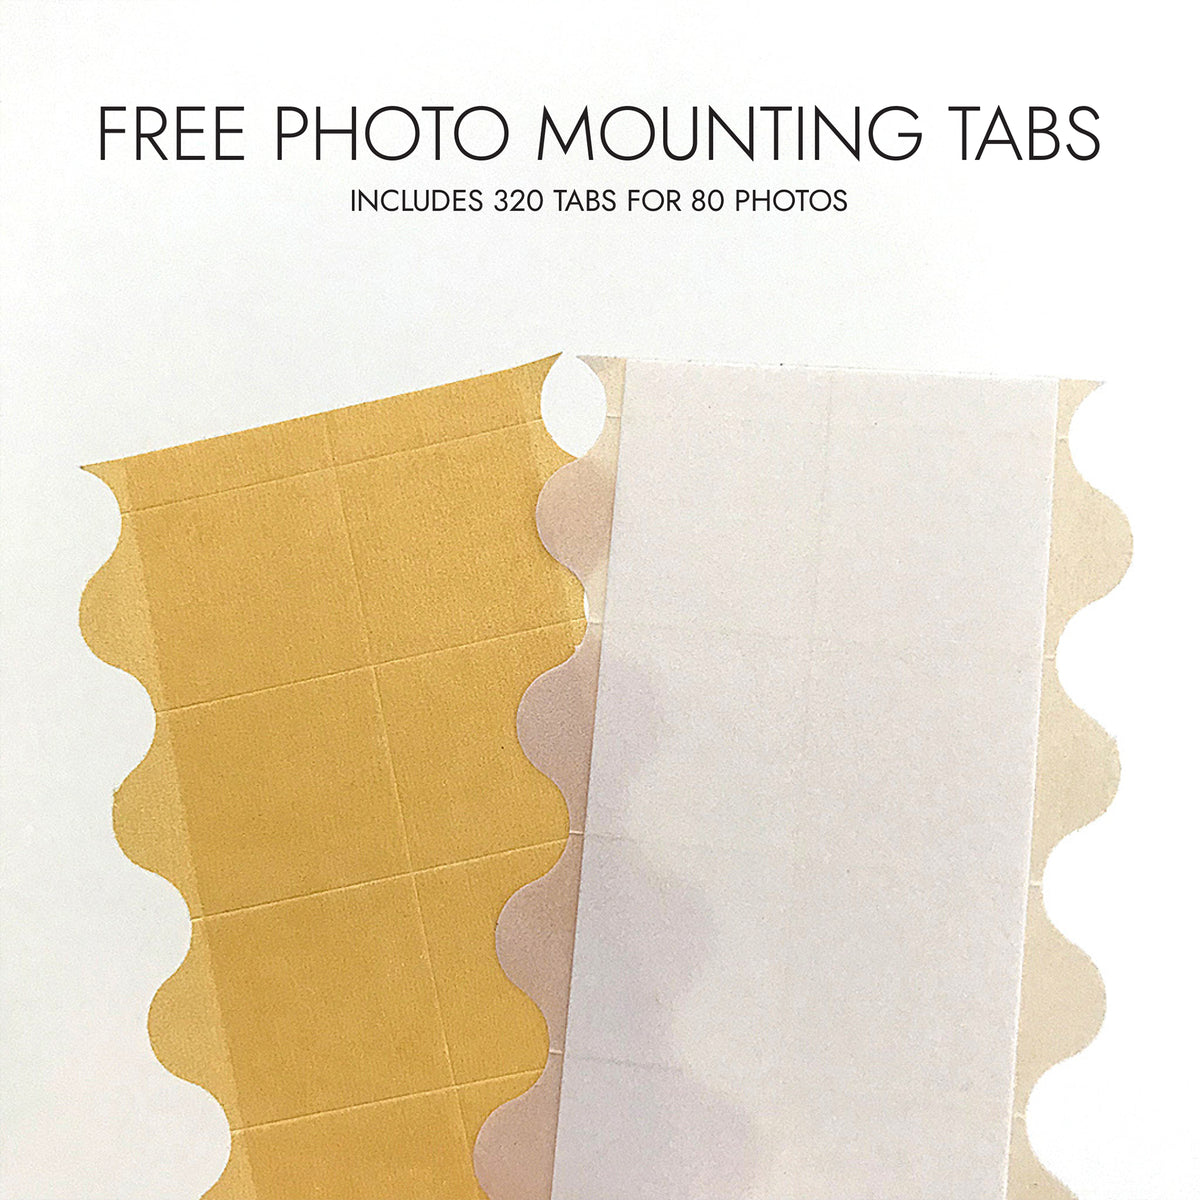 Large 10 x 15 Paper Page Album | Cover: Pastel Blue Cotton | Available Personalized